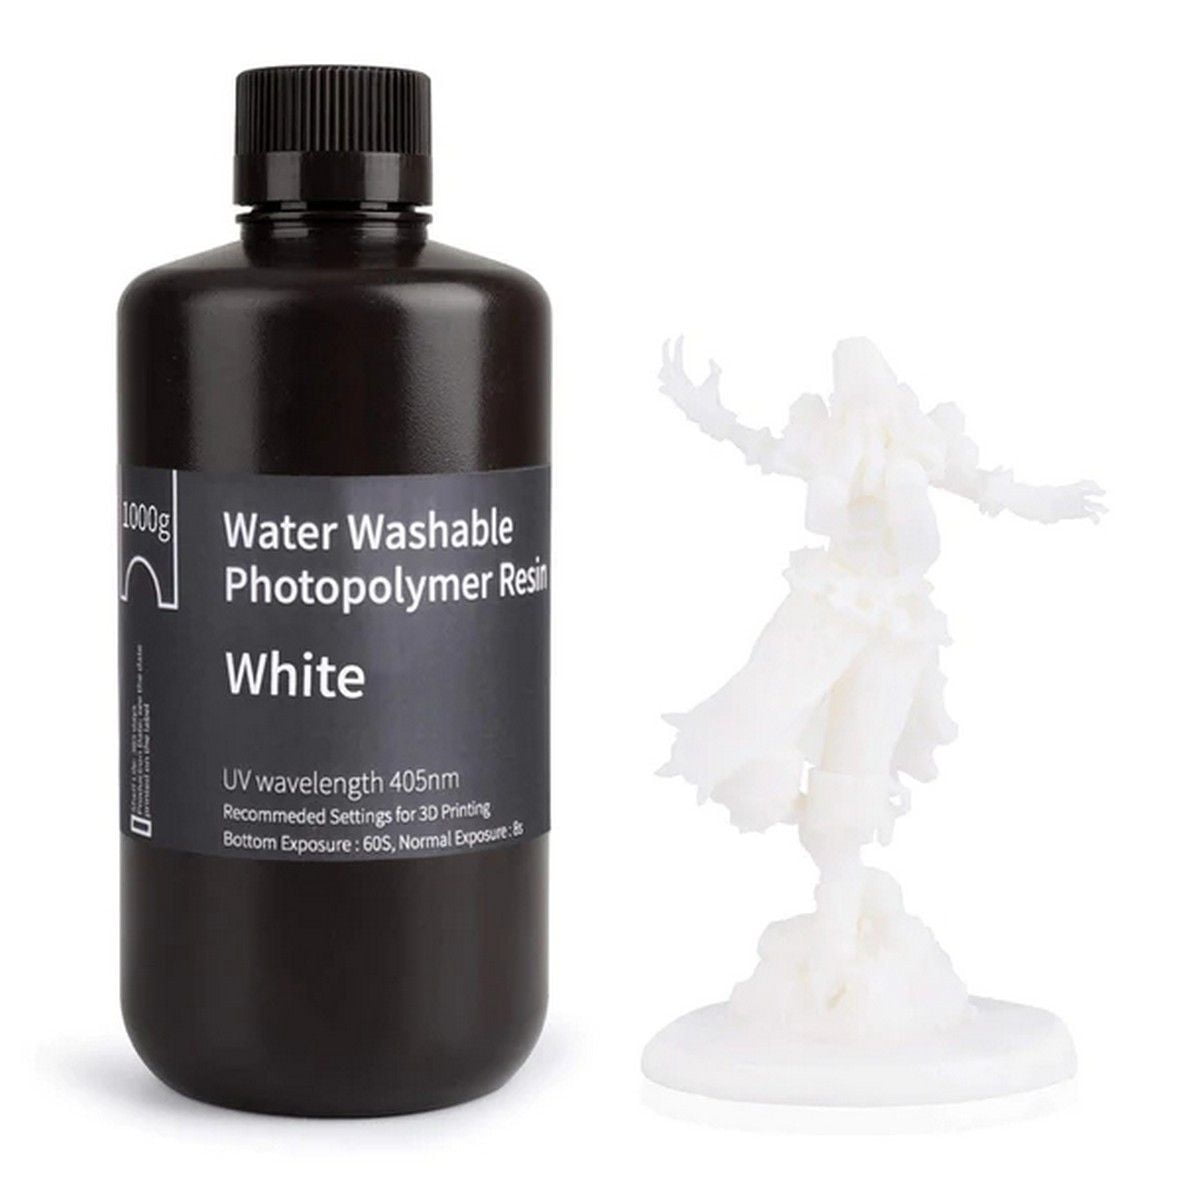 ELEGOO Water Washable Resin 1000g - White